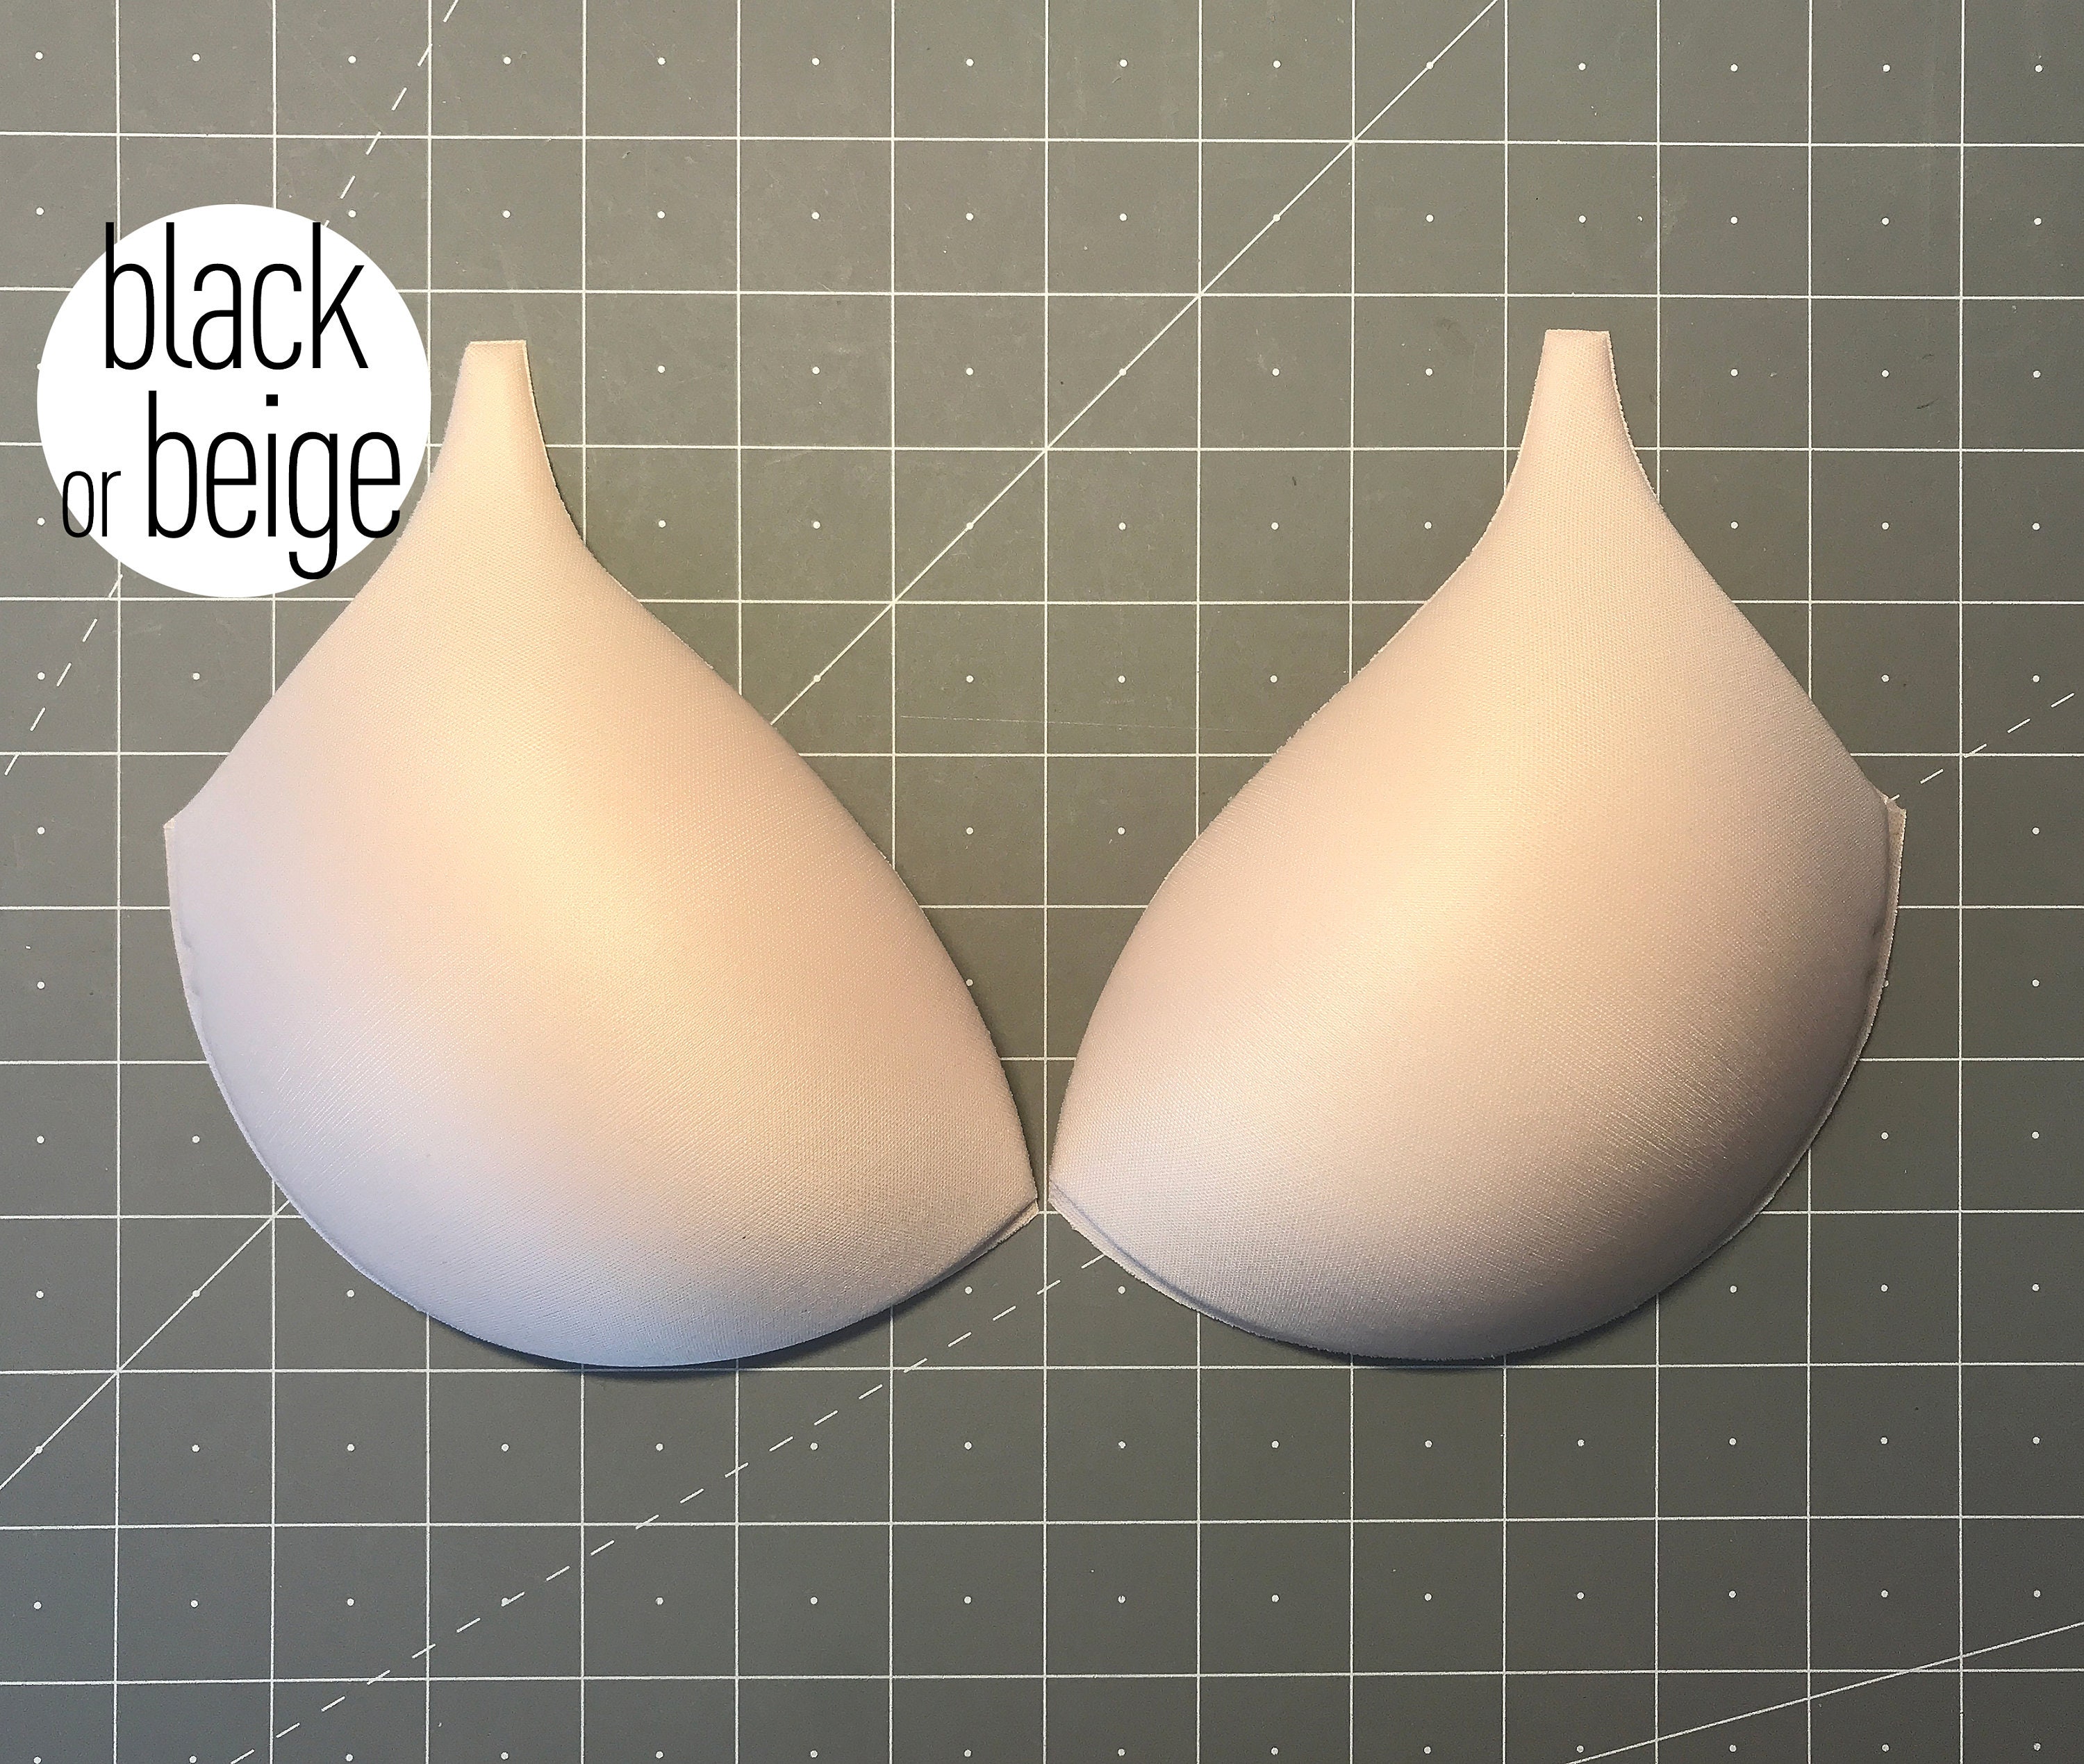 Half Breast Insert Clear Silicone Breast Inserts for Bra or Bikinis 